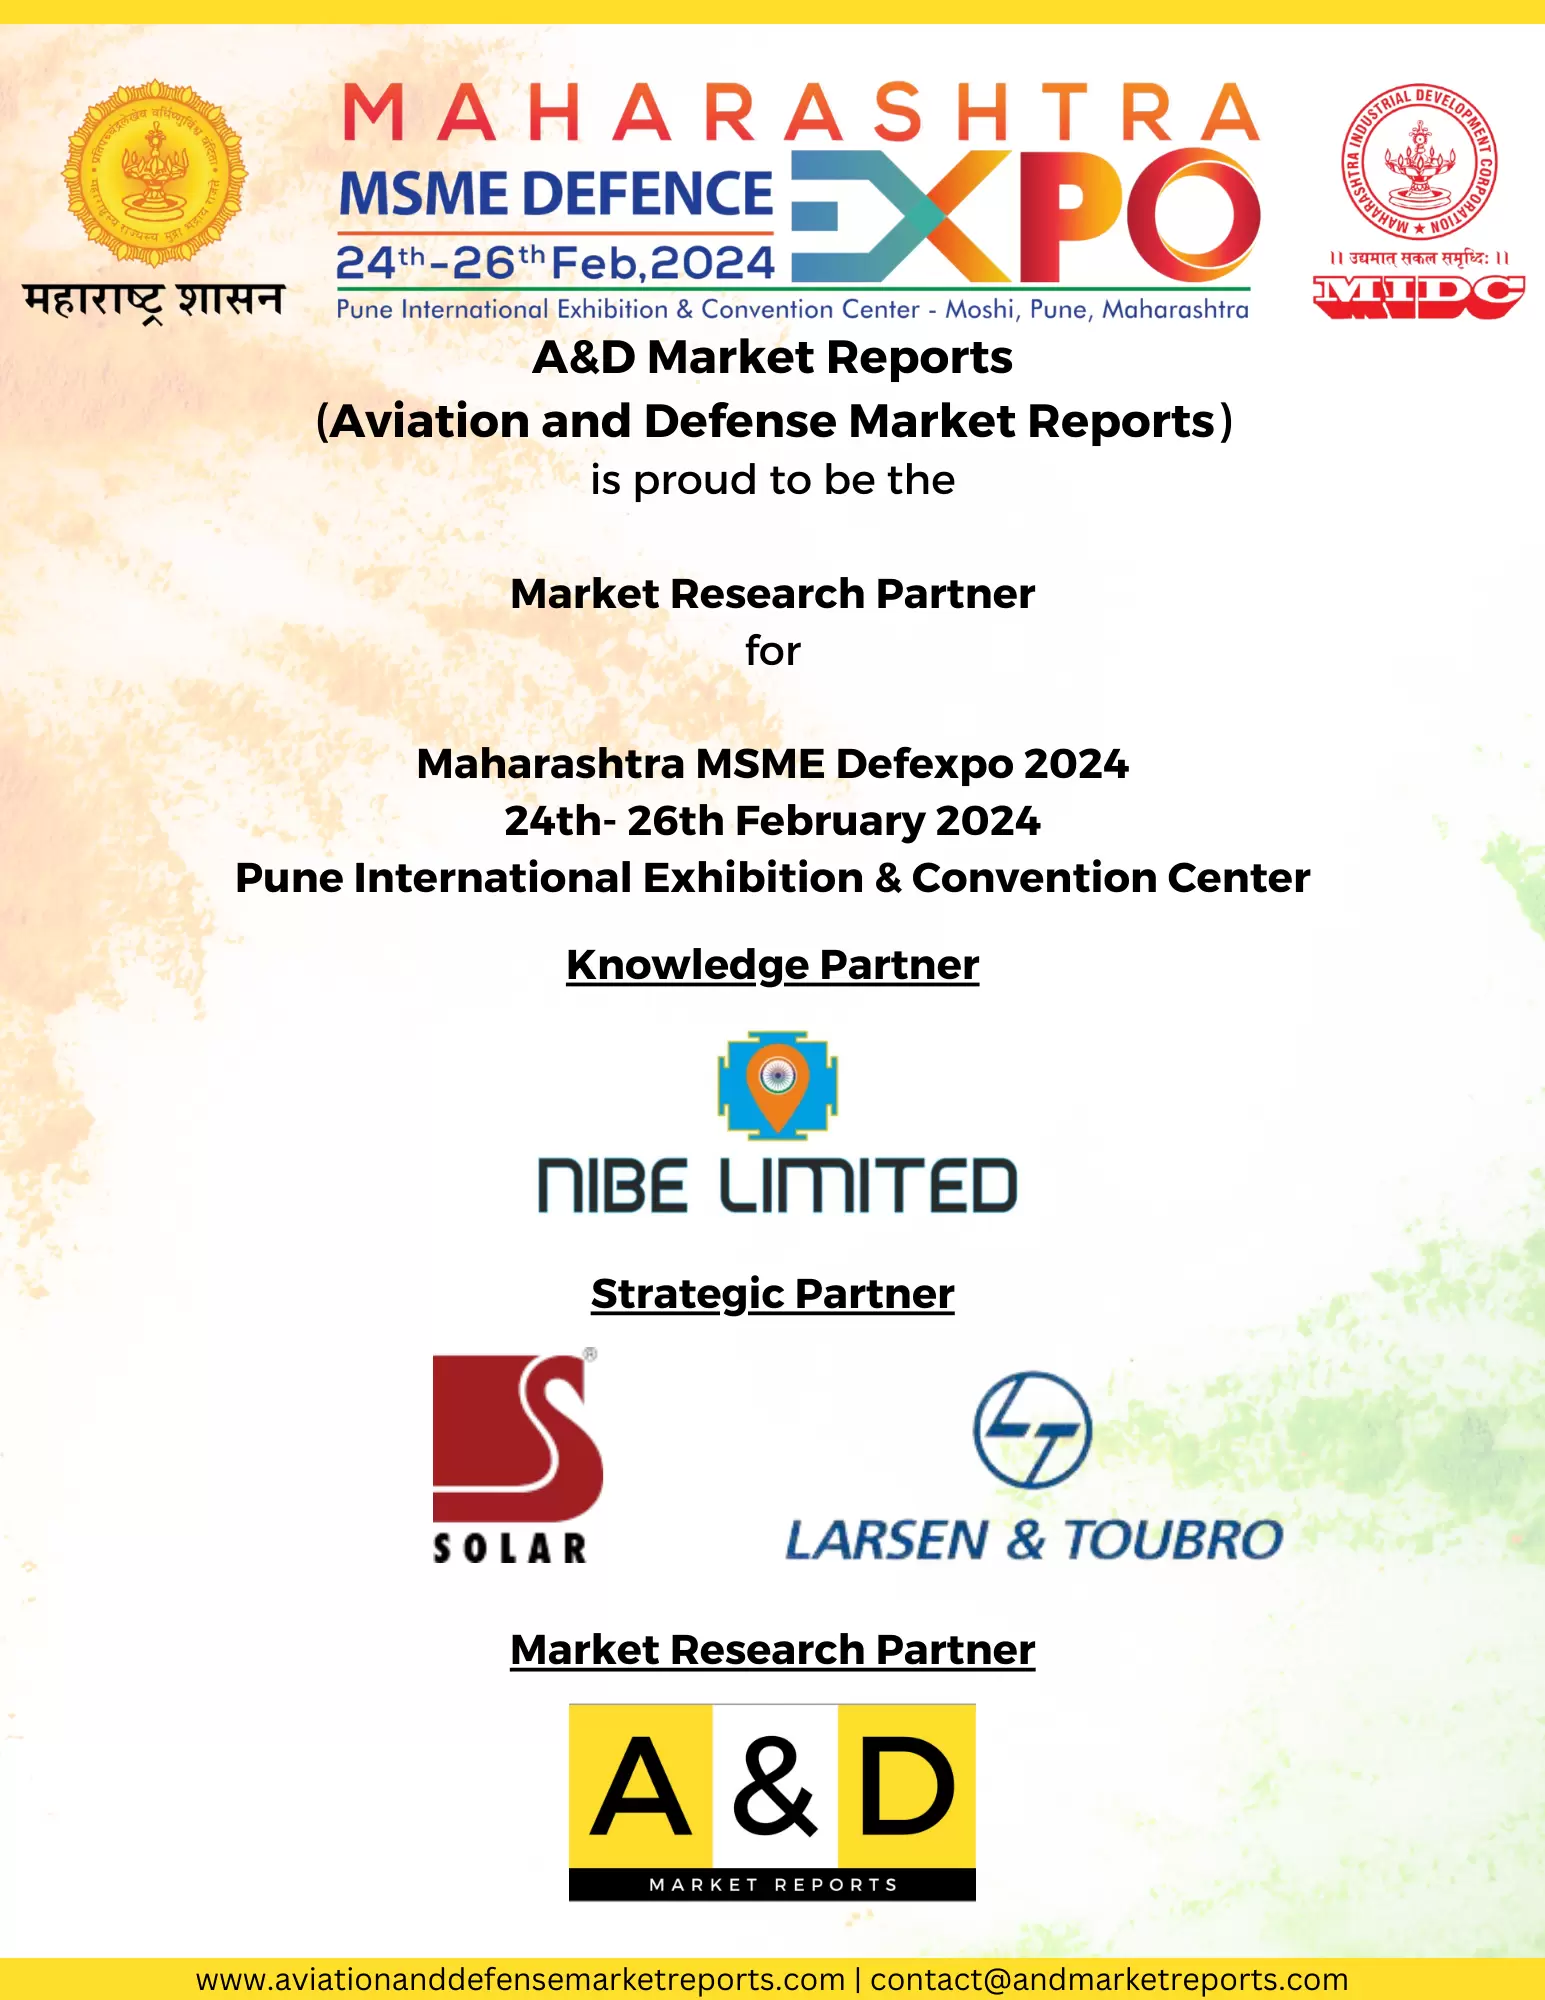 Market Research Partner for MSME Defexpo 2024